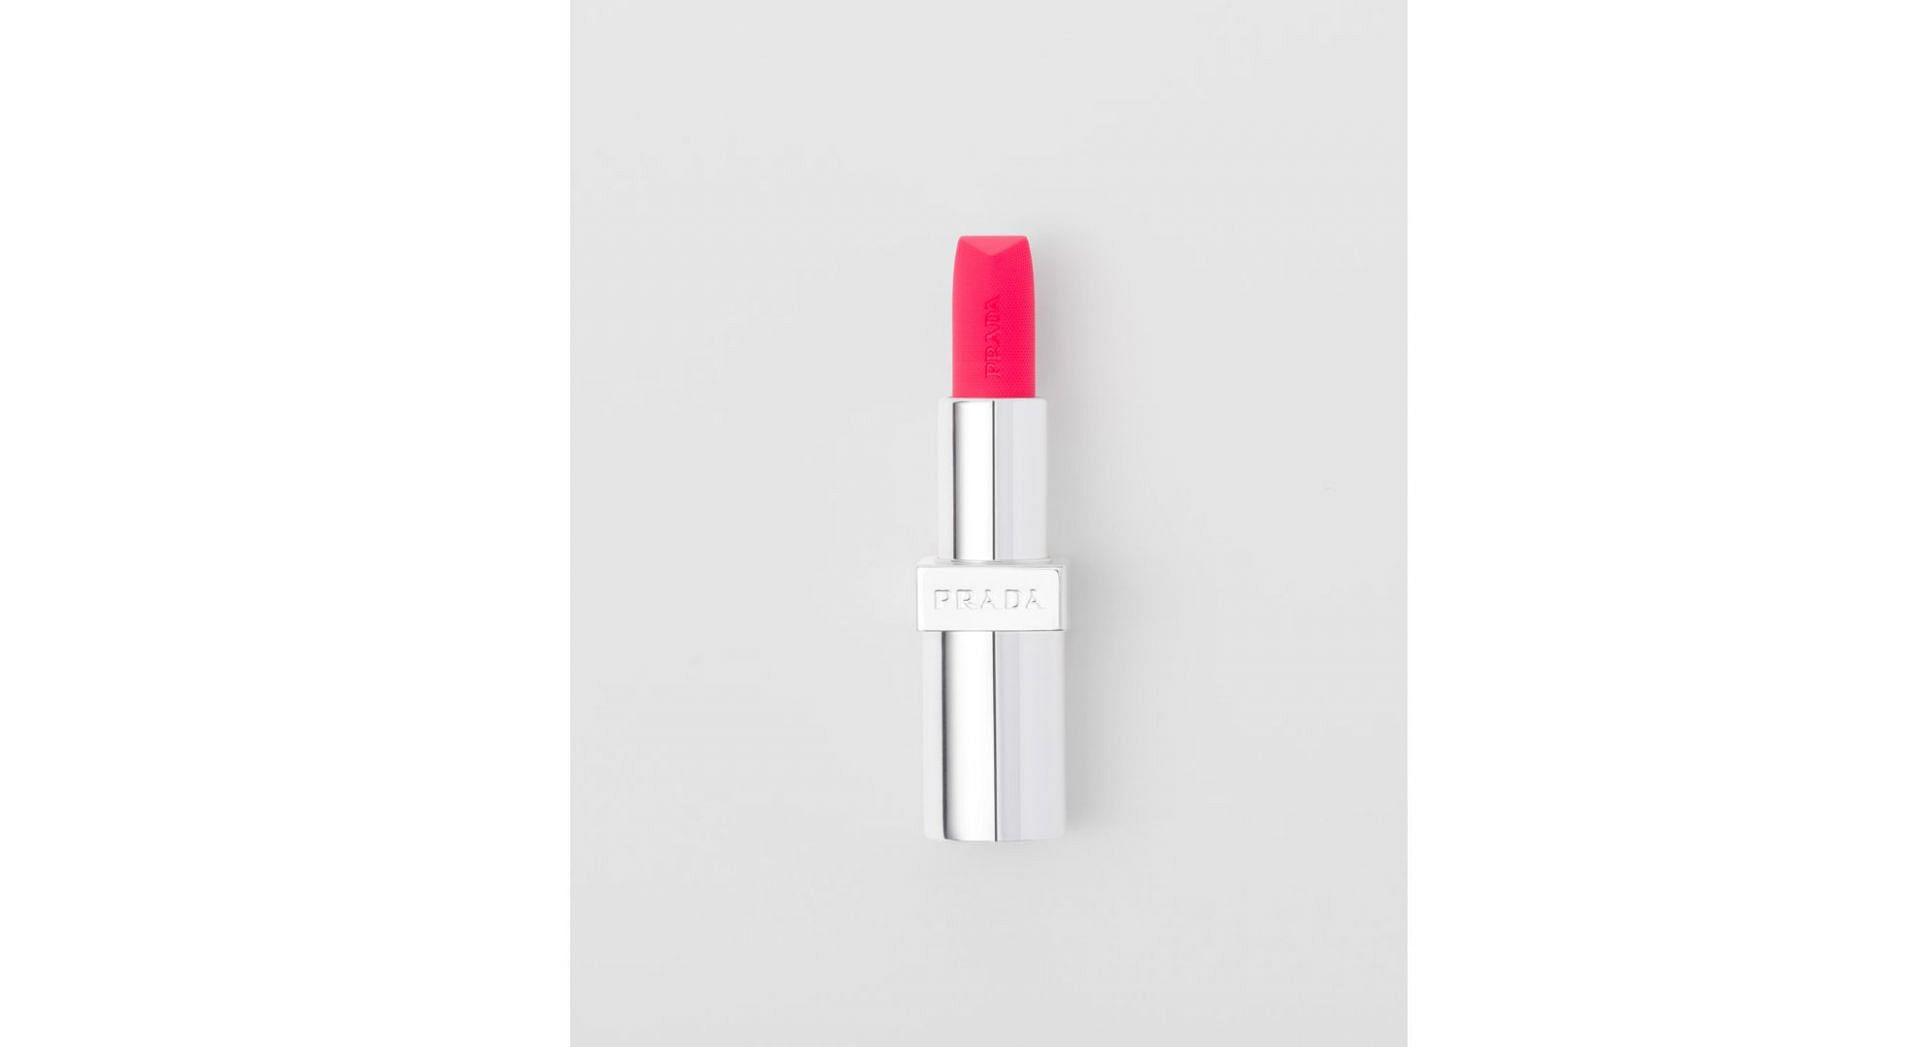 Prada Monochrome Soft Matte Lipstick in Candy (Image via Prada Beauty)